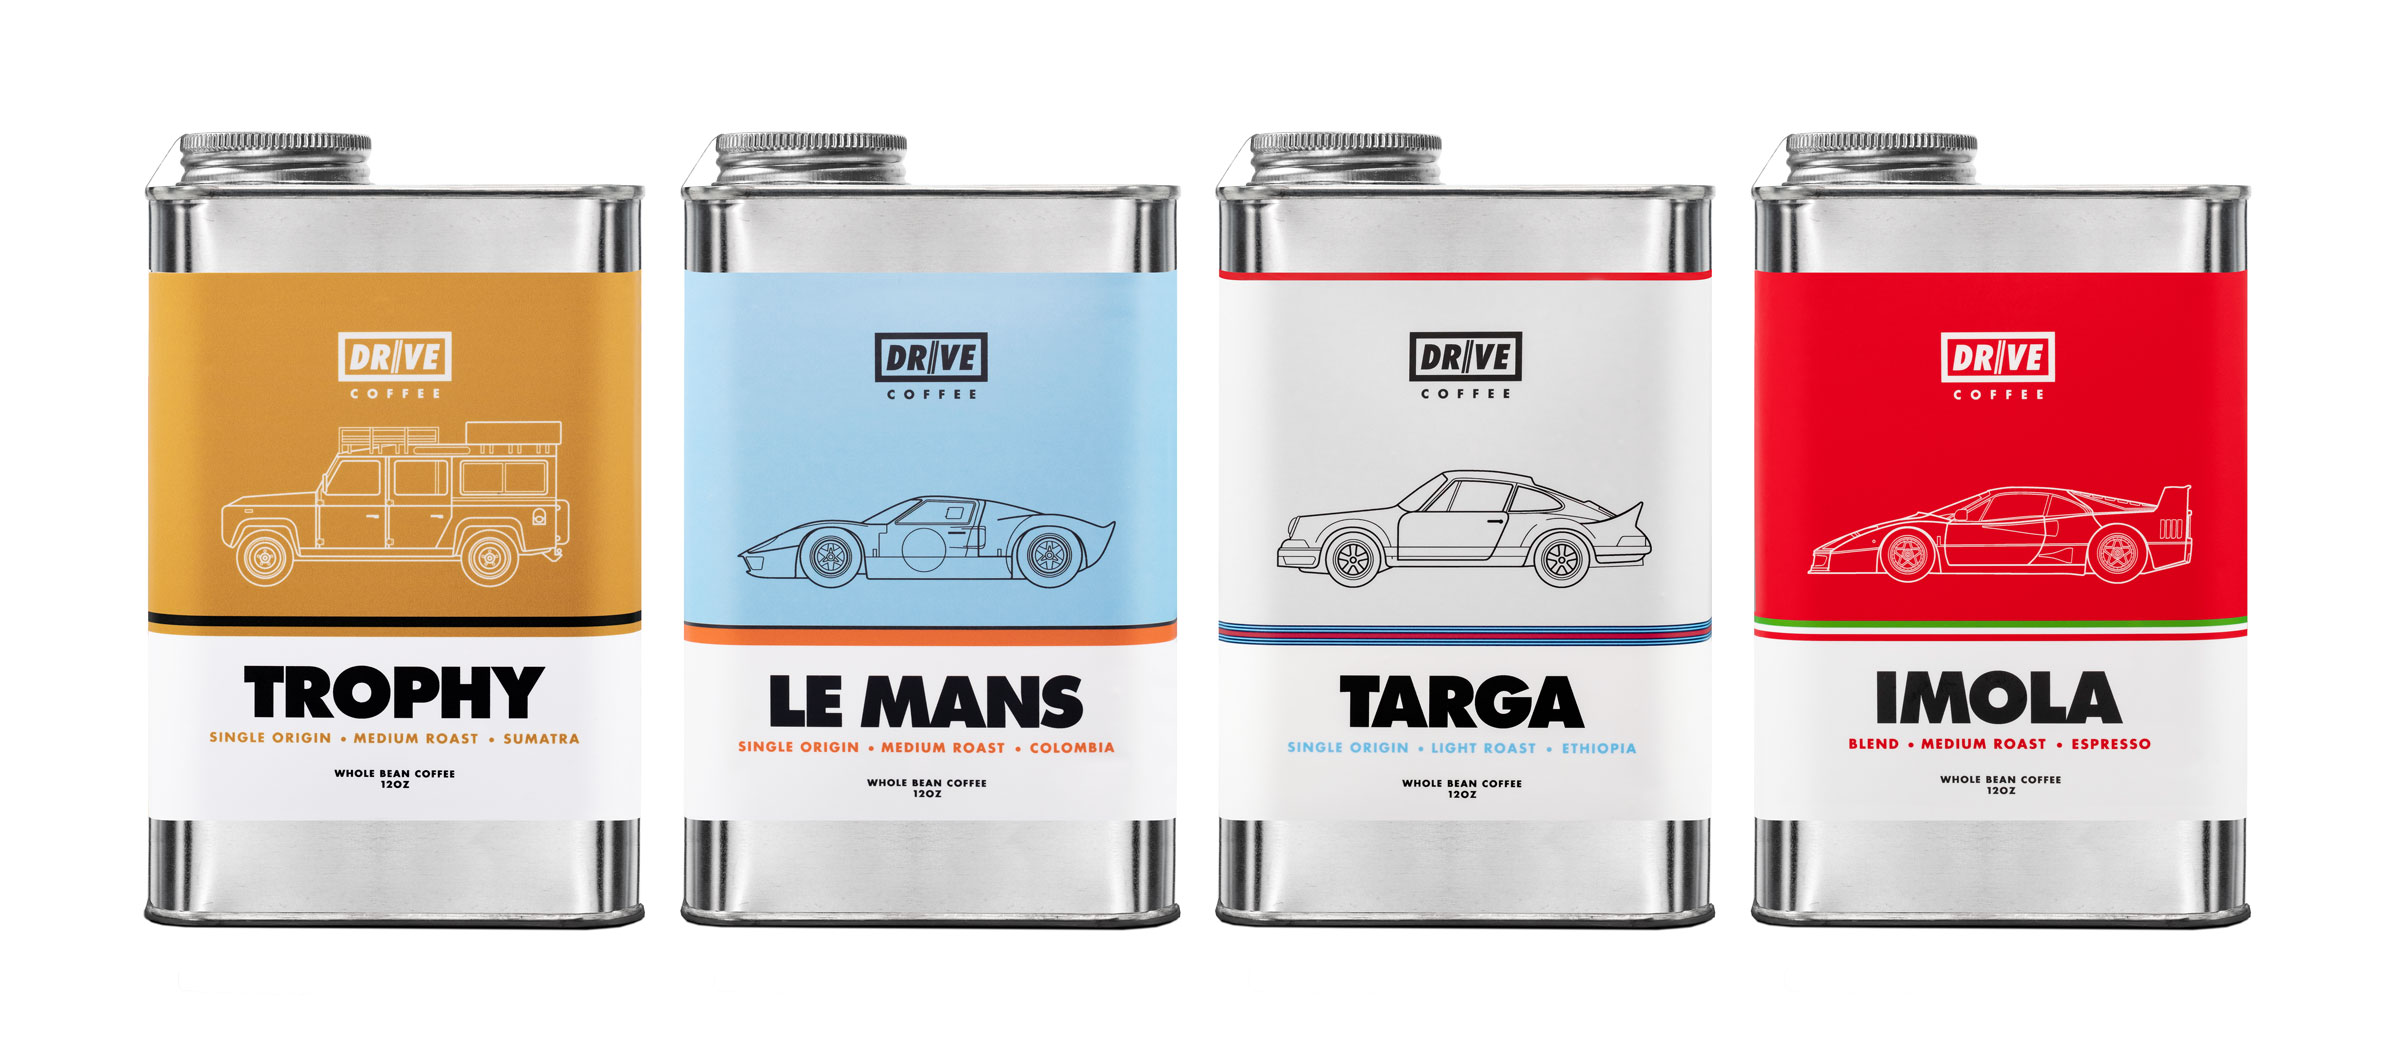 A photo of 4 Drive Coffee tins - Trophy, Le Mans, Targa, Imola